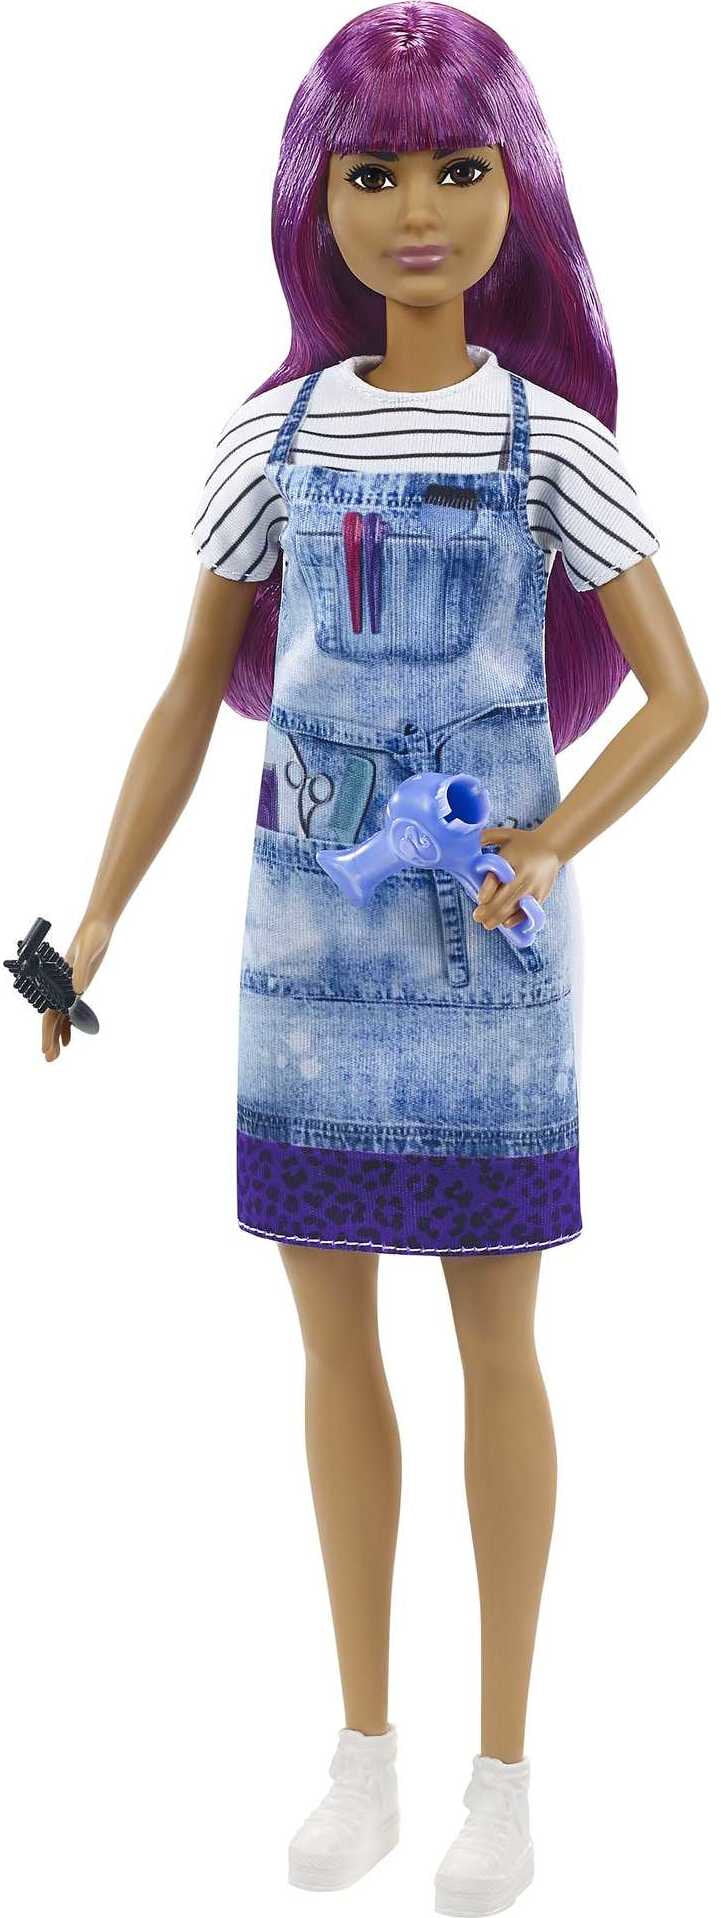 Small purple & silver Barbie doll purse w/ wrist strap 